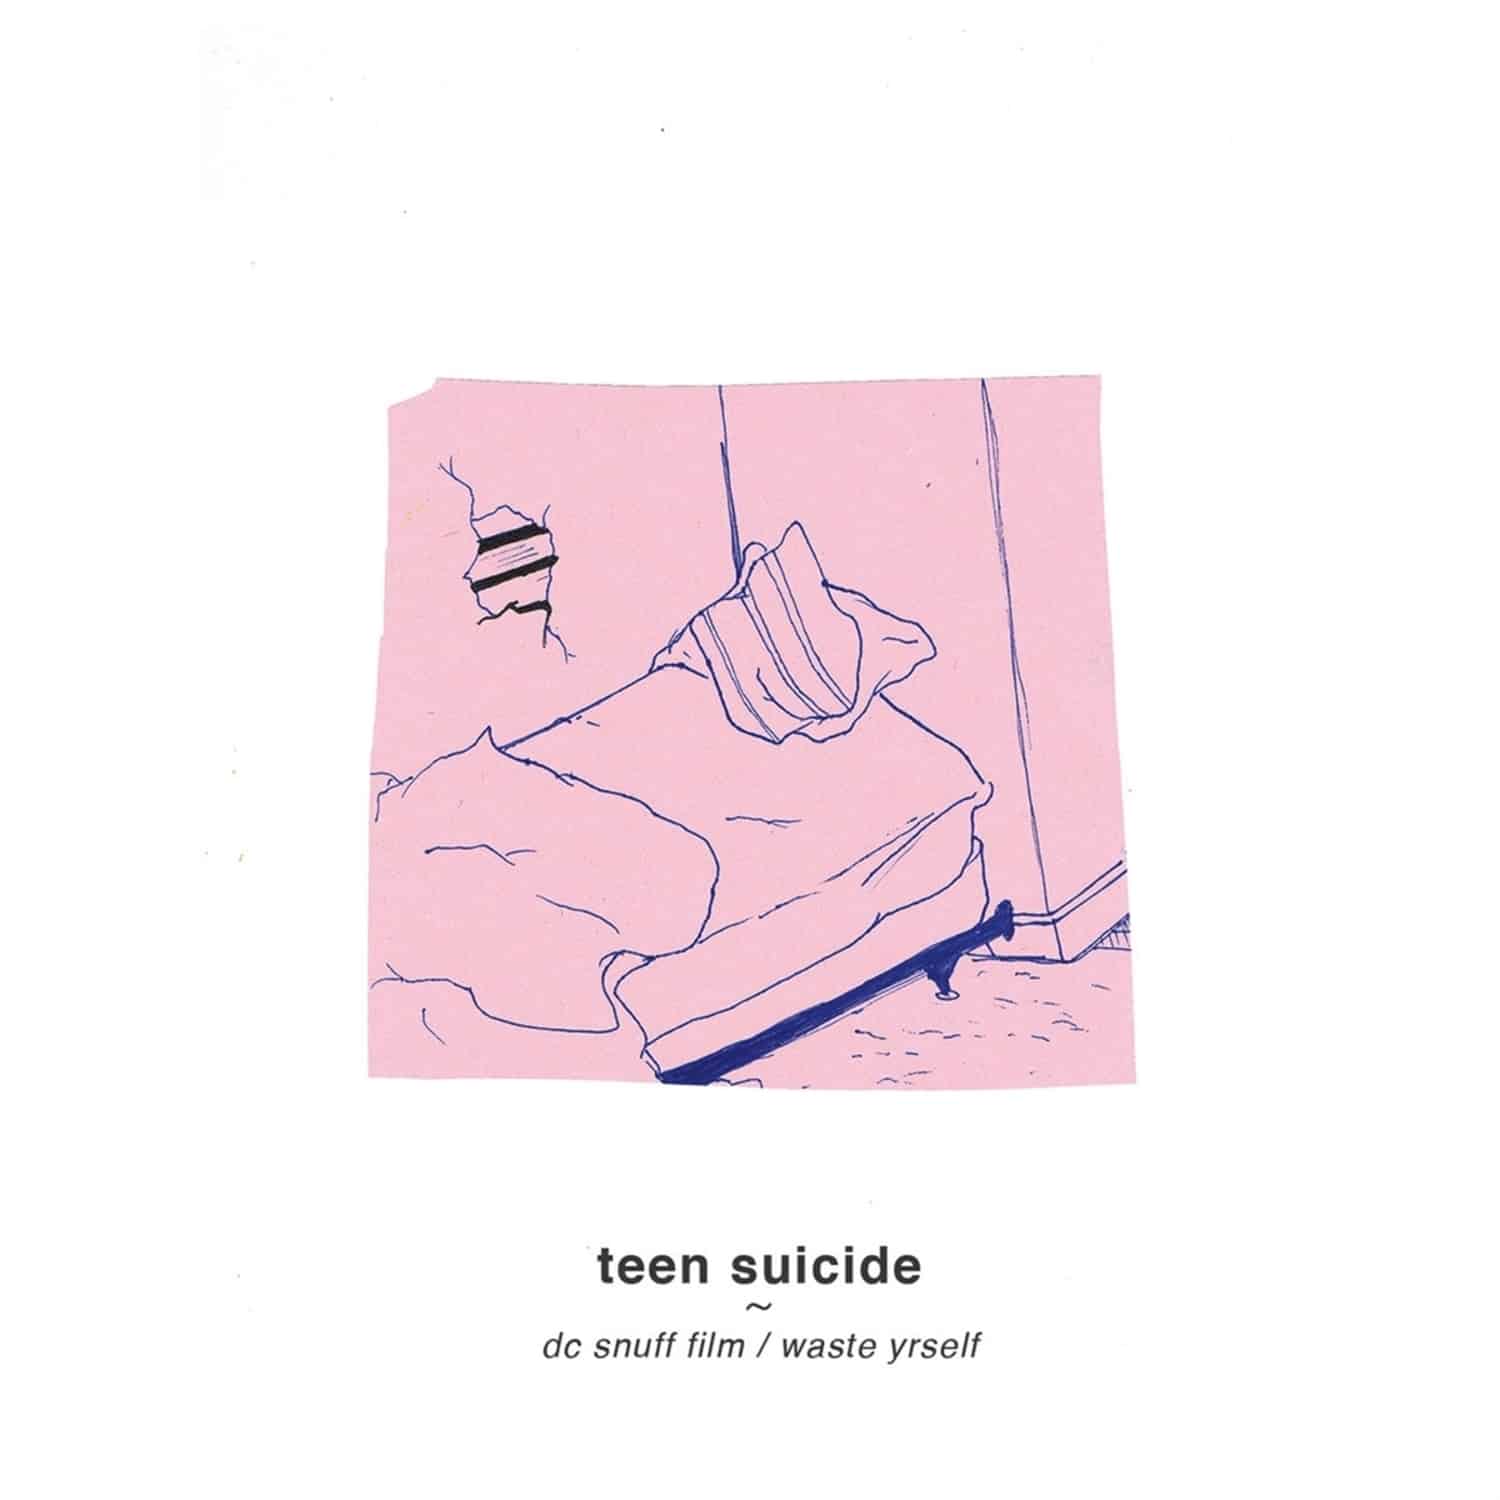 Teen Suicide - DC SNUFF FILM/ WASTE YRSELF 